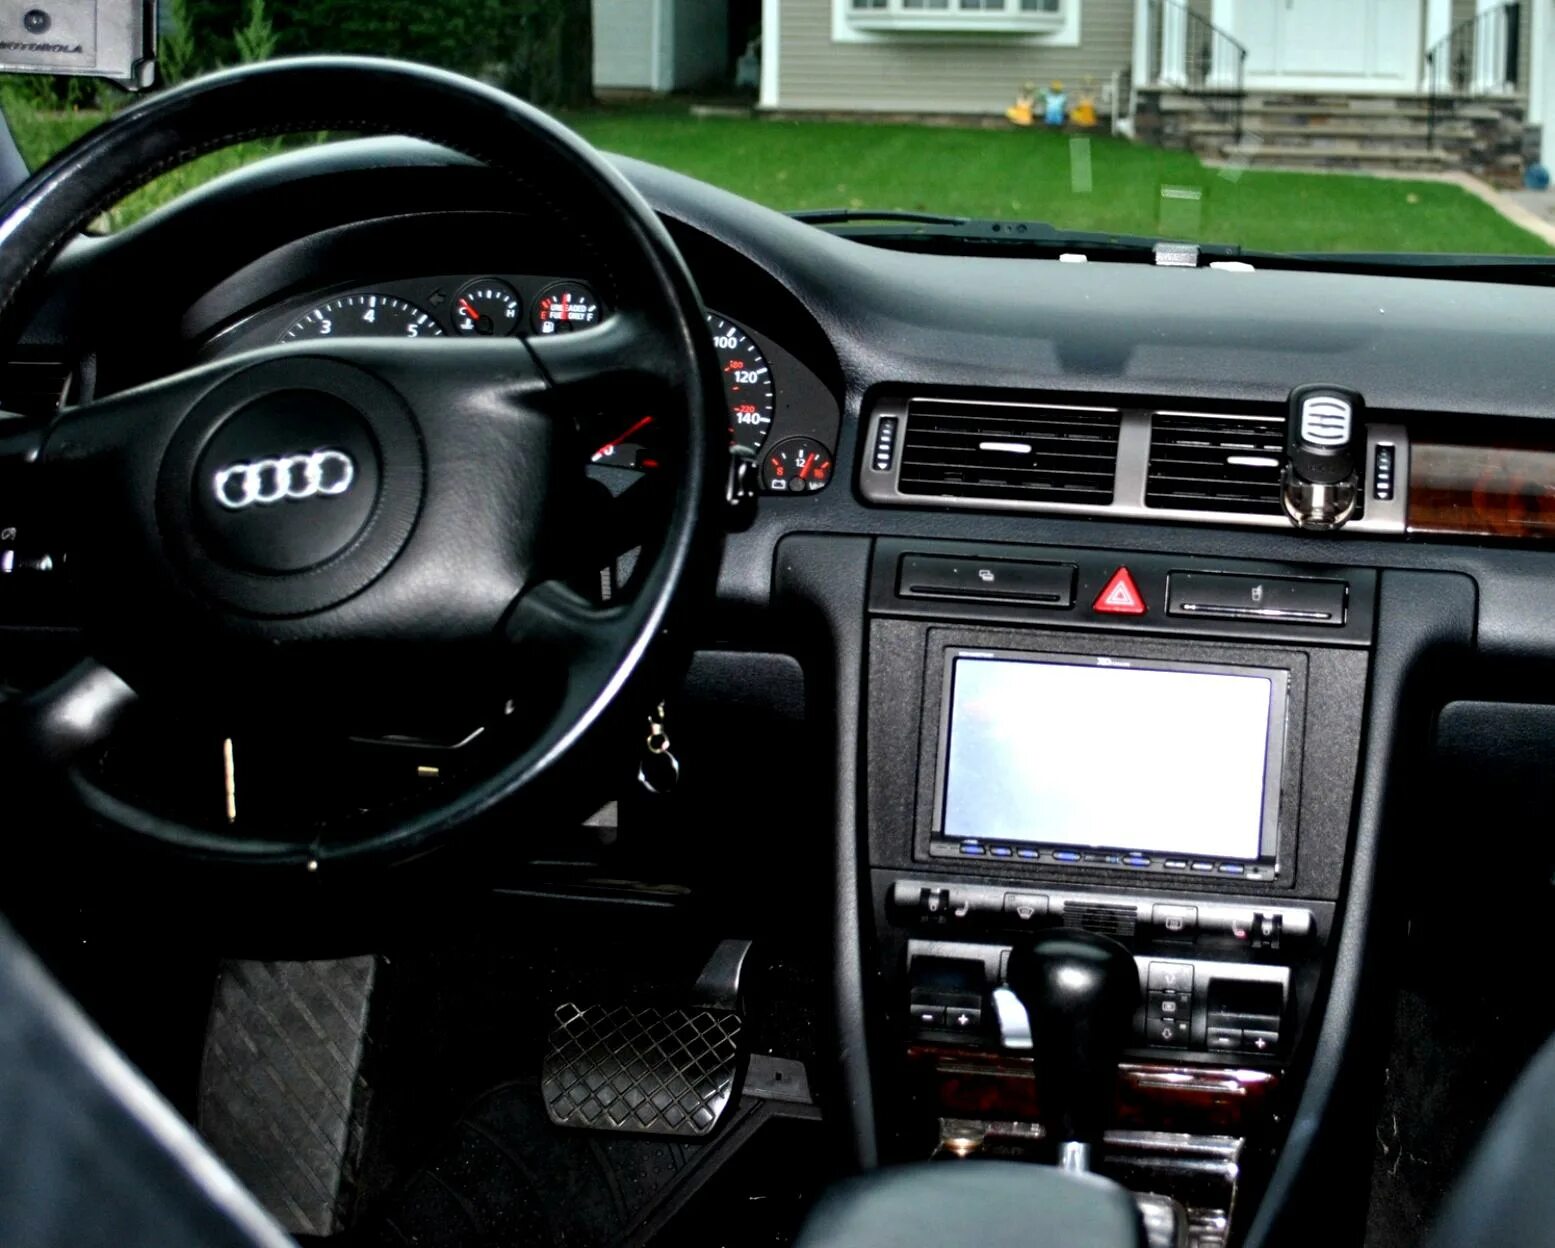 Audi a6 2001. Ауди а6 с5 салон магнитола. Audi a6 c5 2001. Магнитола Audi a6 c5.